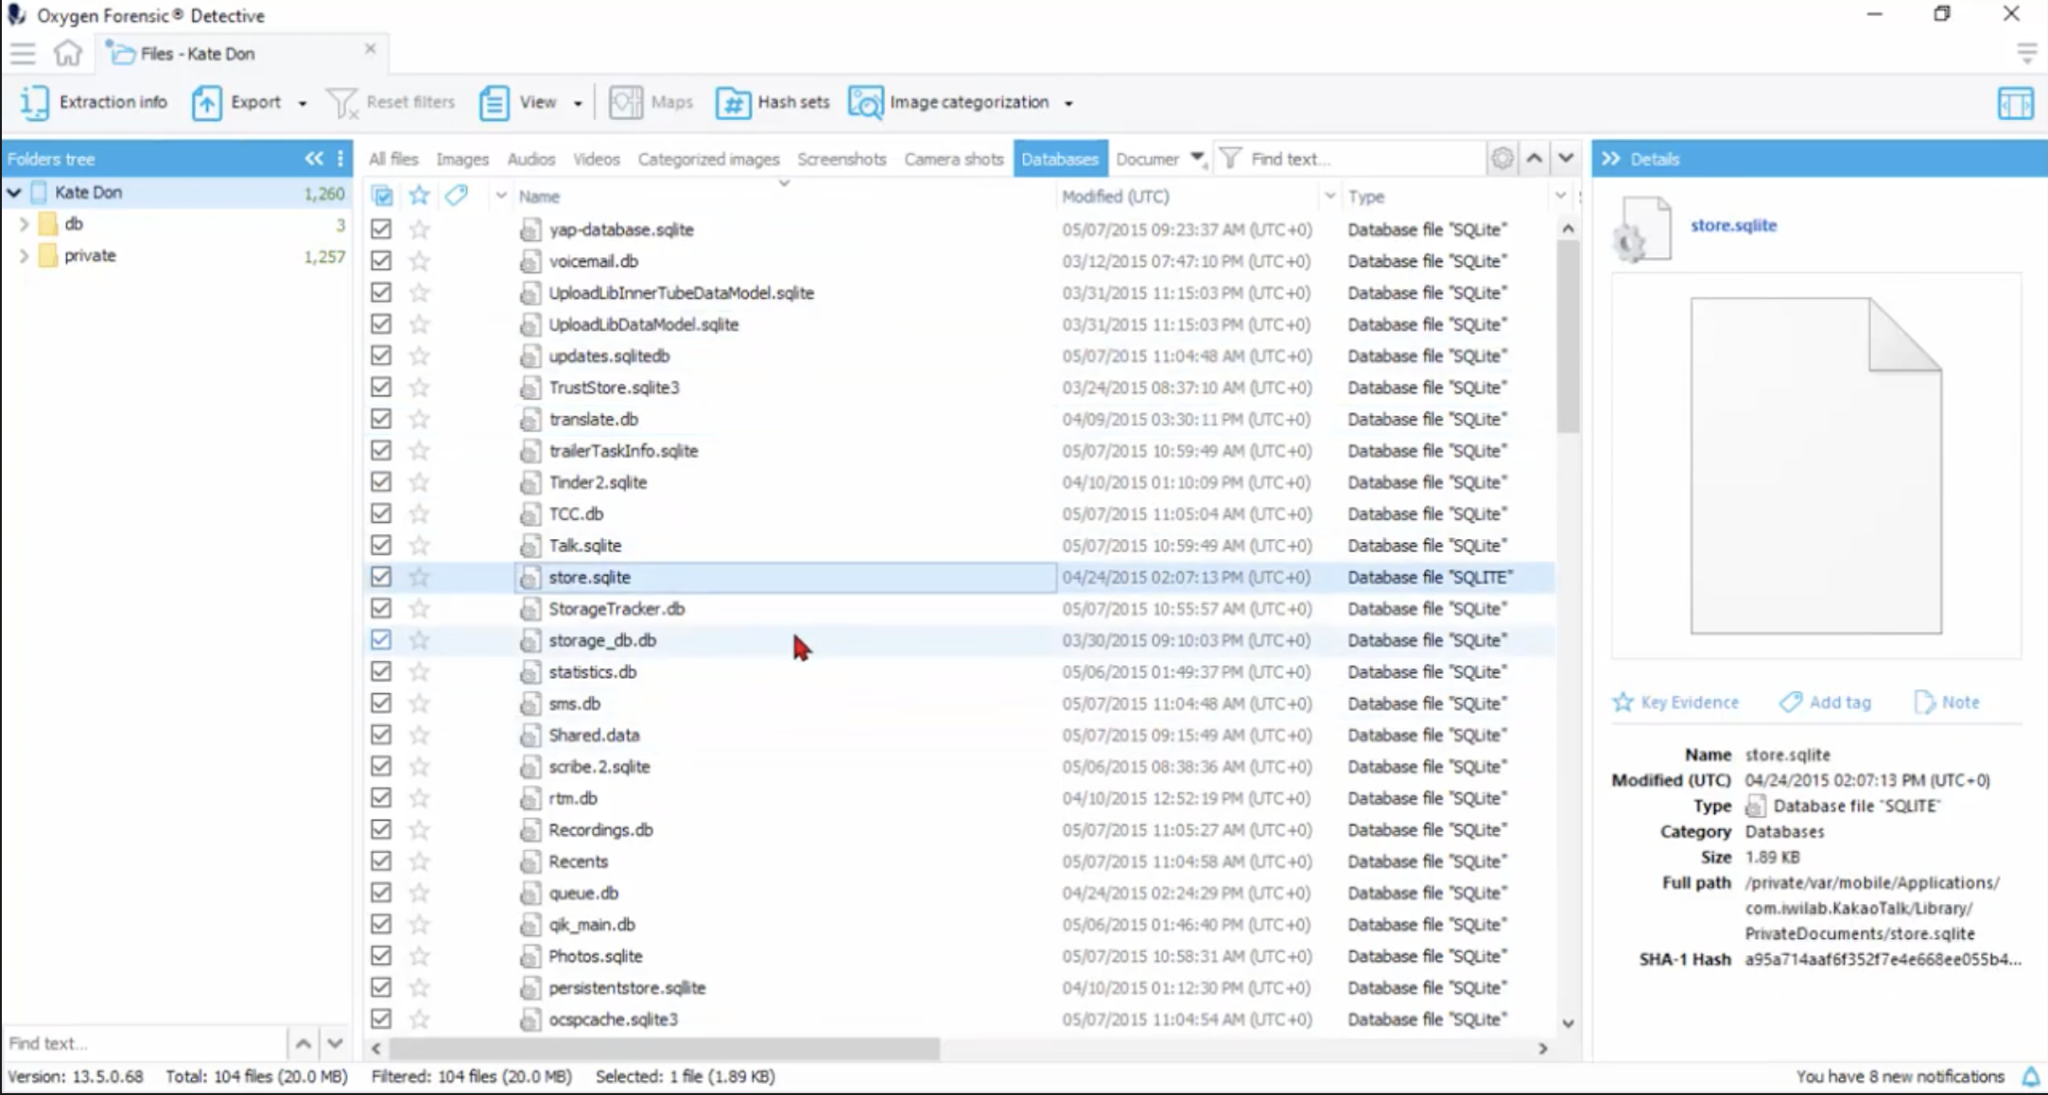 sqlite database viewer forensics freeware no installation